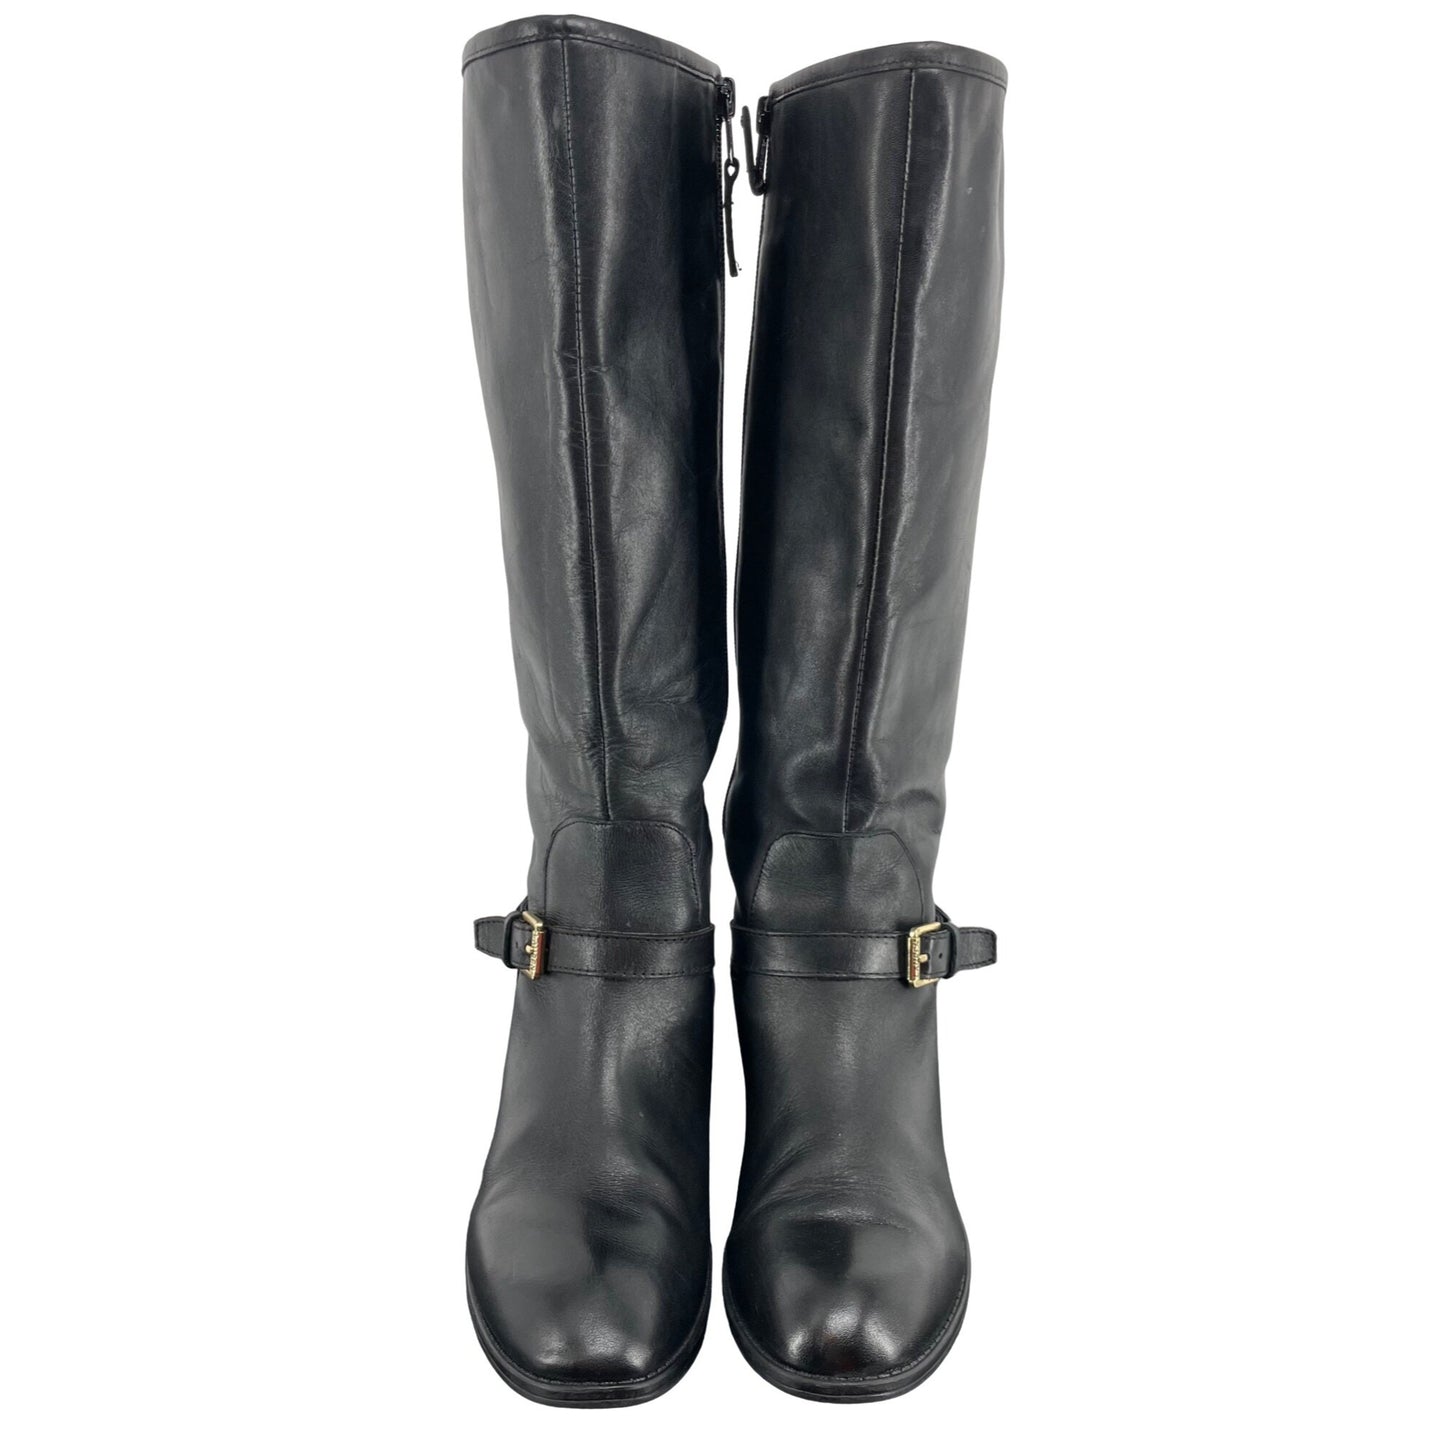 Ralph Lauren Women's Size 6.5 Black Knee-High Leather Riding Boots